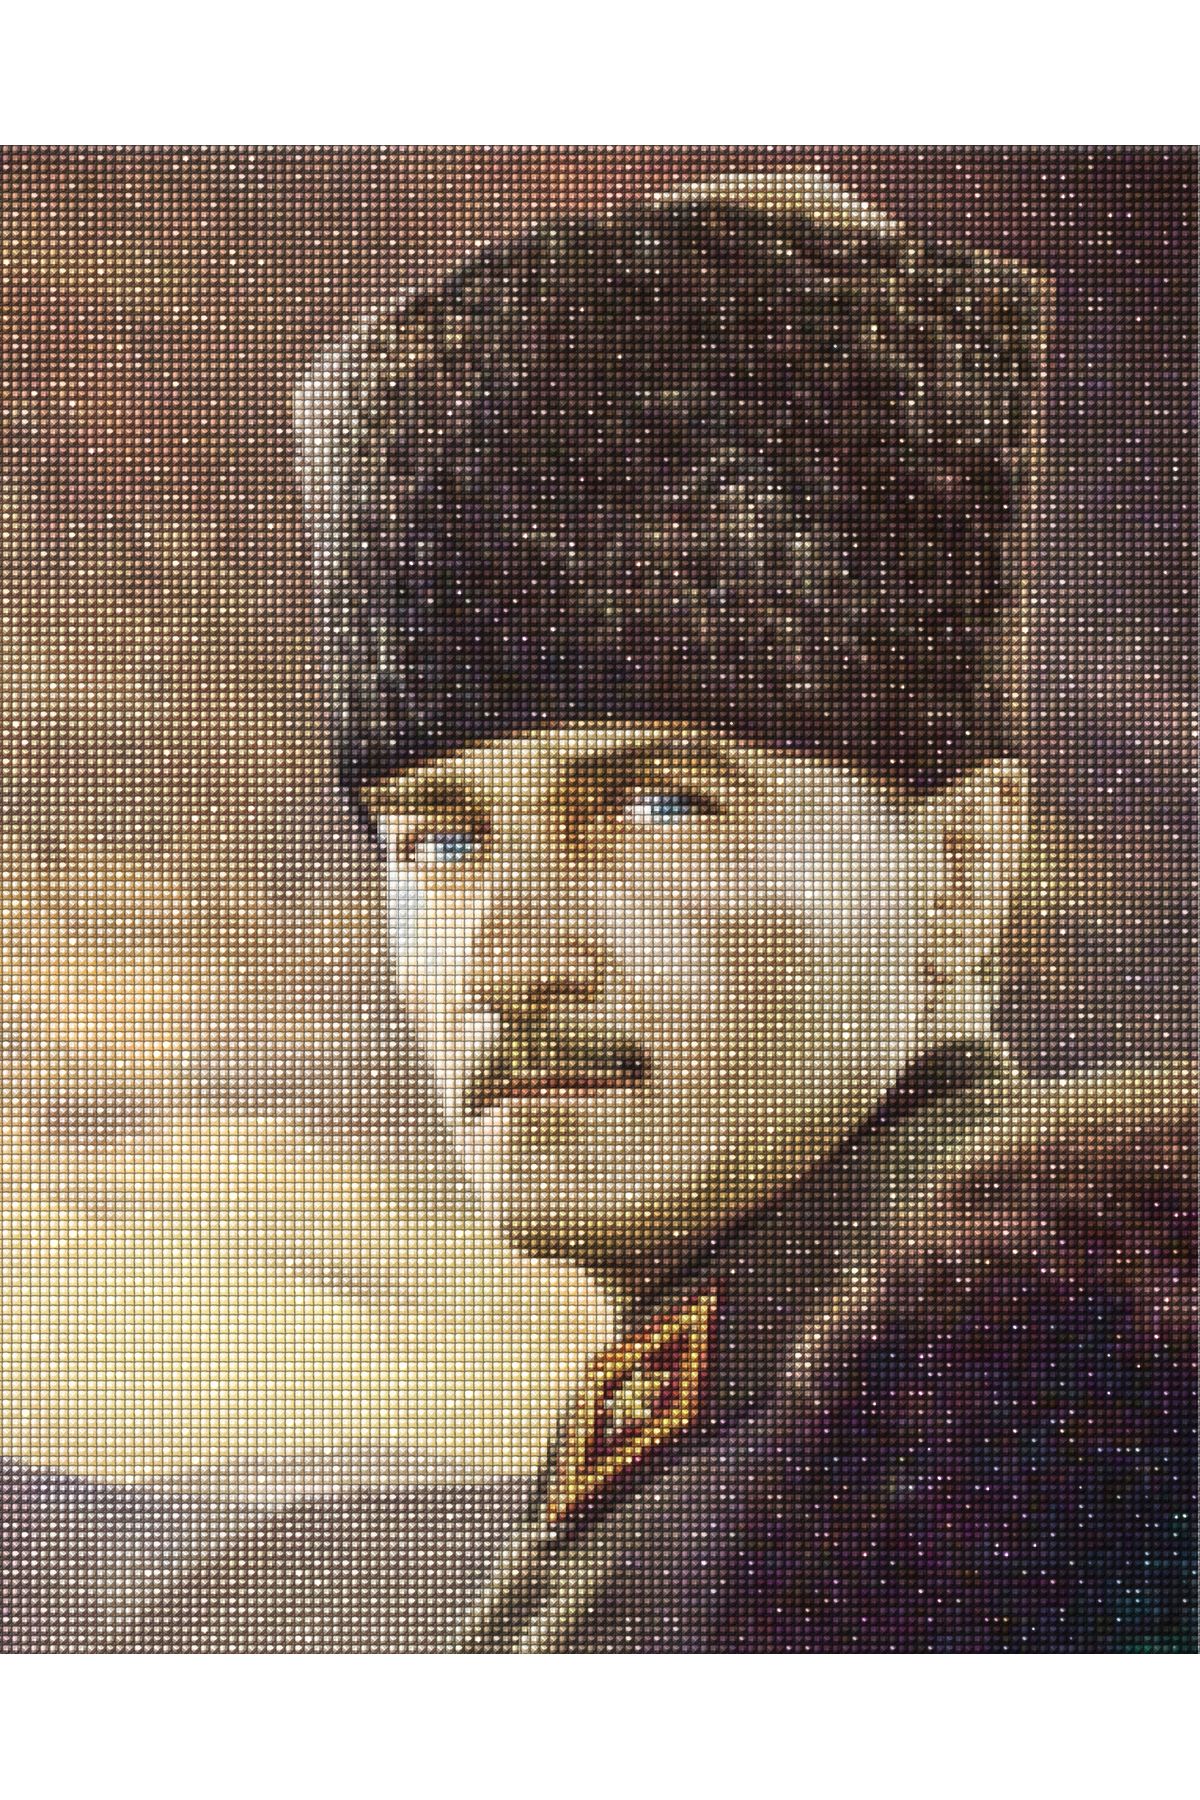 MAXİ Atatürk Portre - Diamond Painting, Elmaslı Goblen, Mozaik Tablo, Elmas, Boncuk, Taş Işleme 40 X 50cm